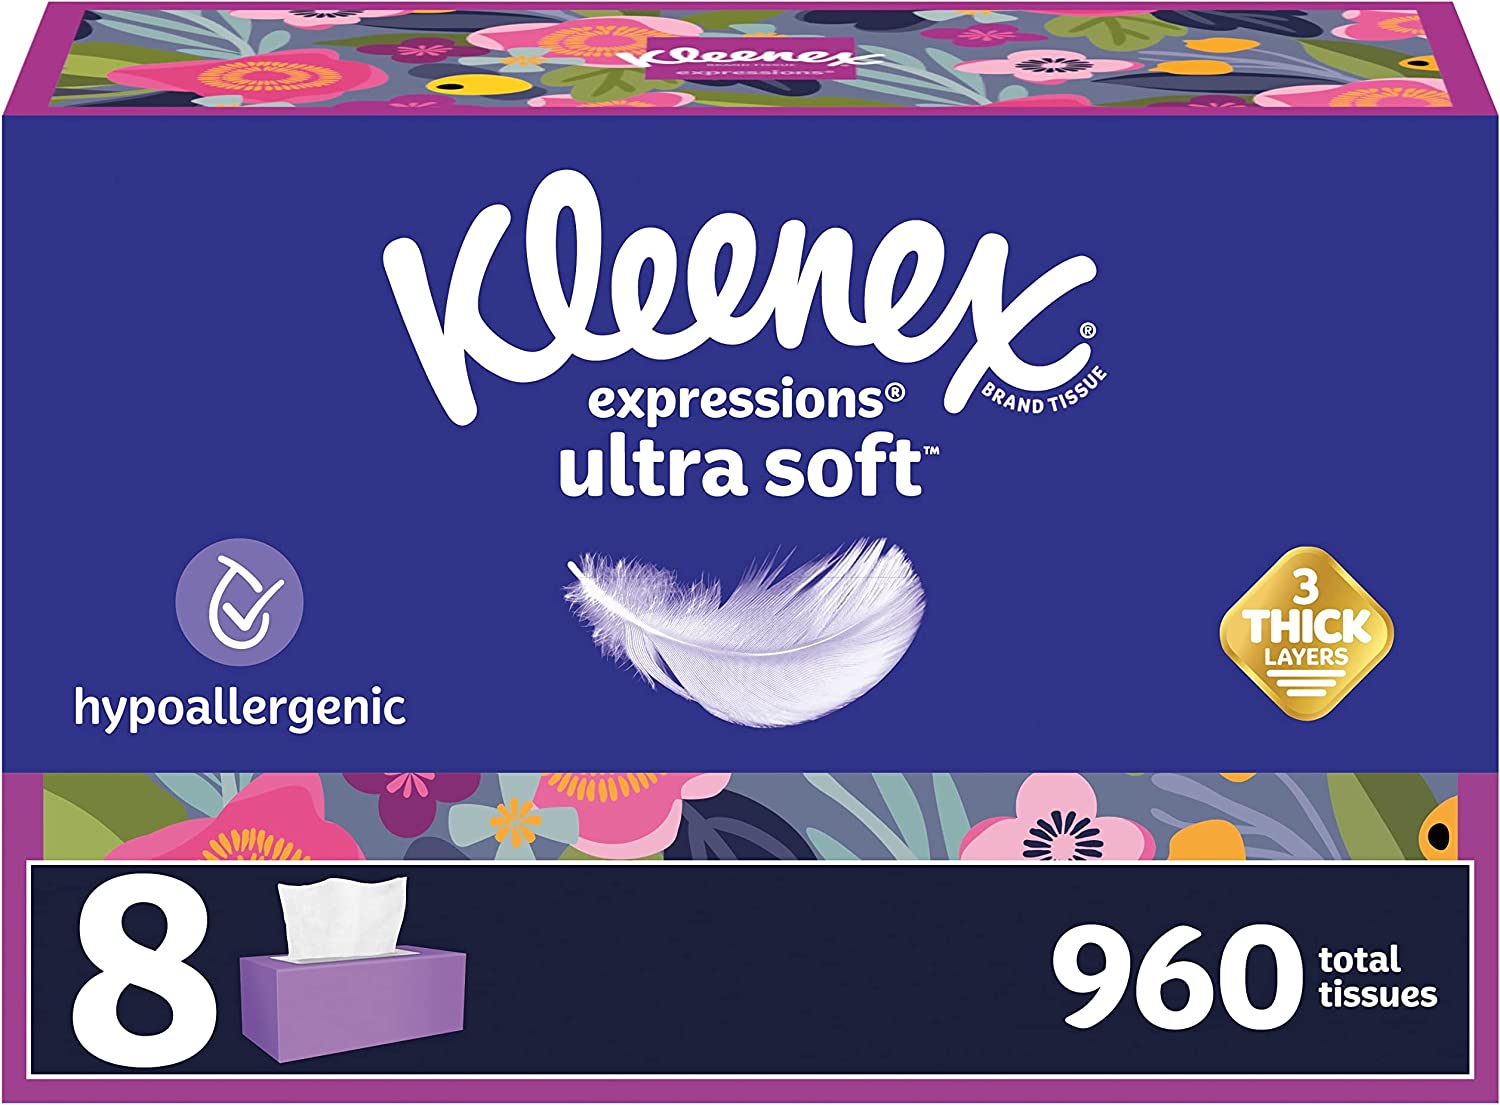 Kleenex Trusted Care Tissues, 160 count